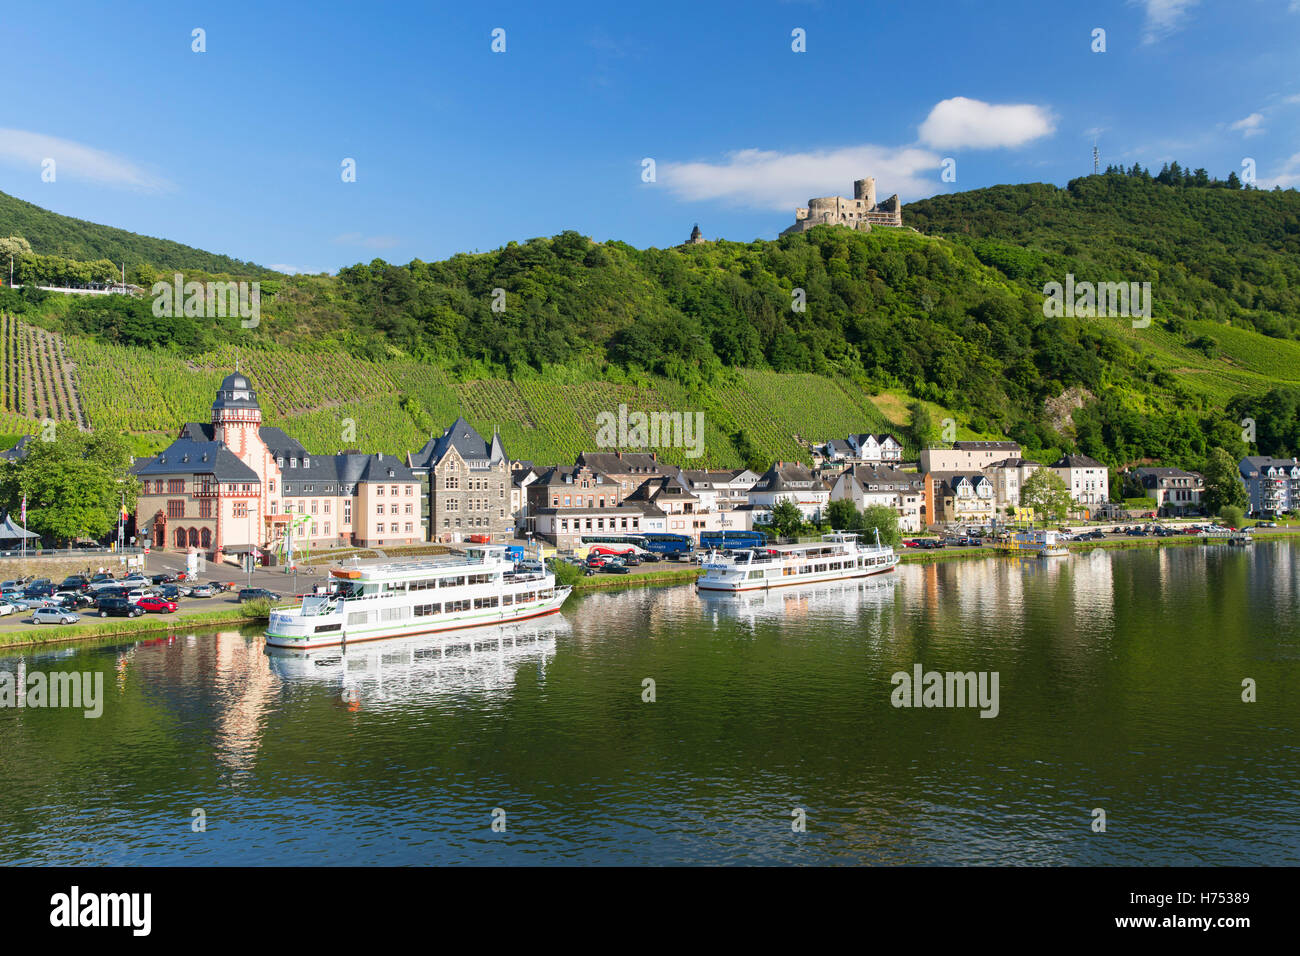 View of River Moselle and Burg Landshut, Bernkastel-Kues, Rhineland-Palatinate, Germany Stock Photo